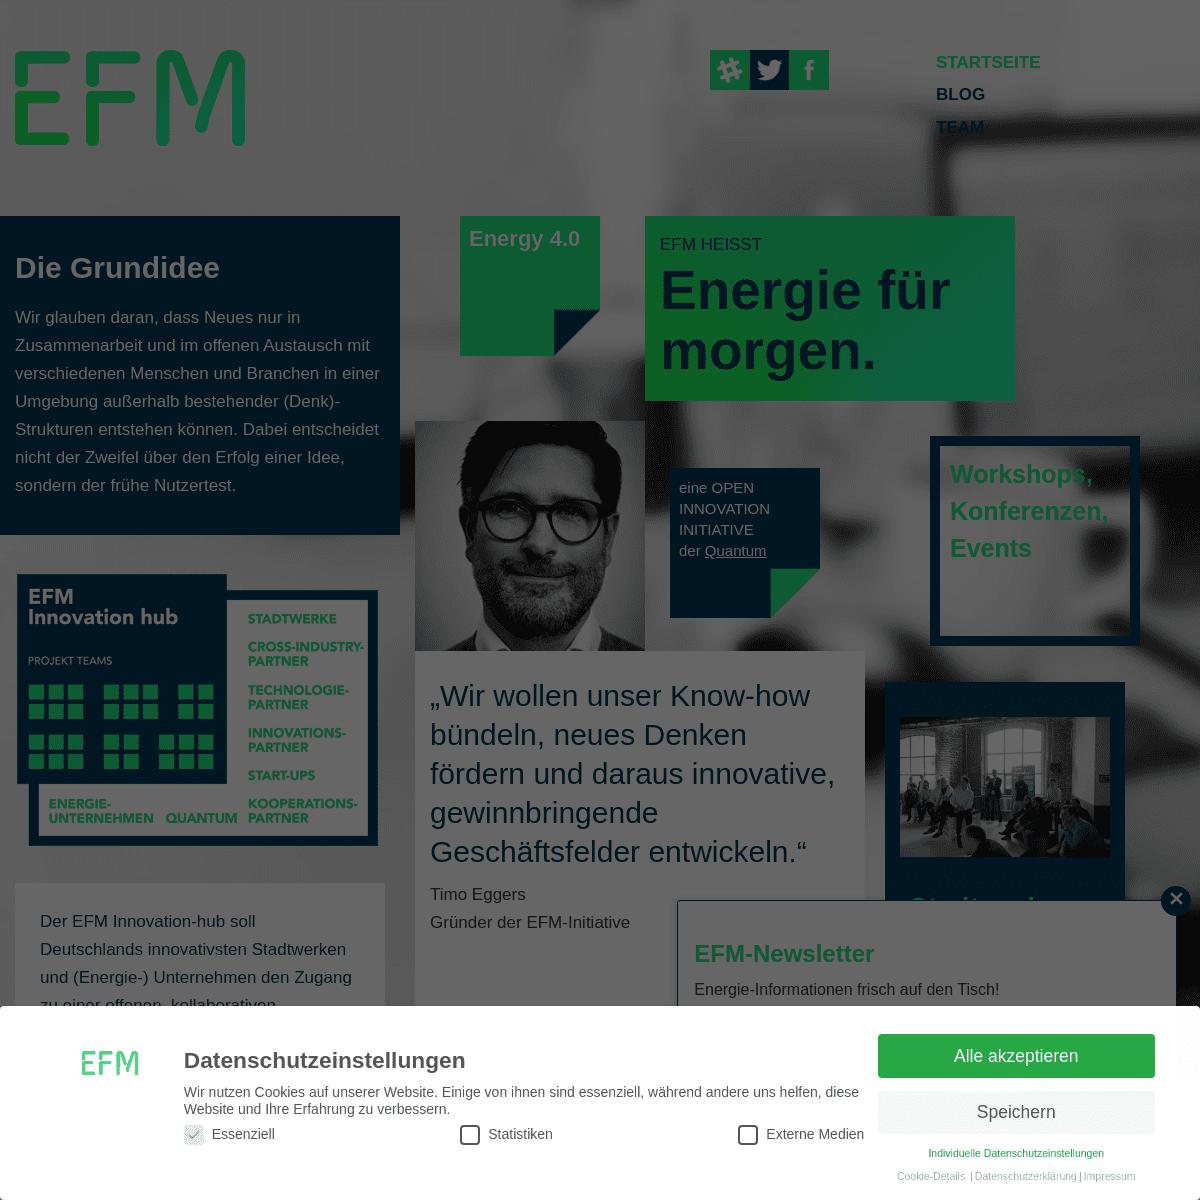 A complete backup of hello-efm.de